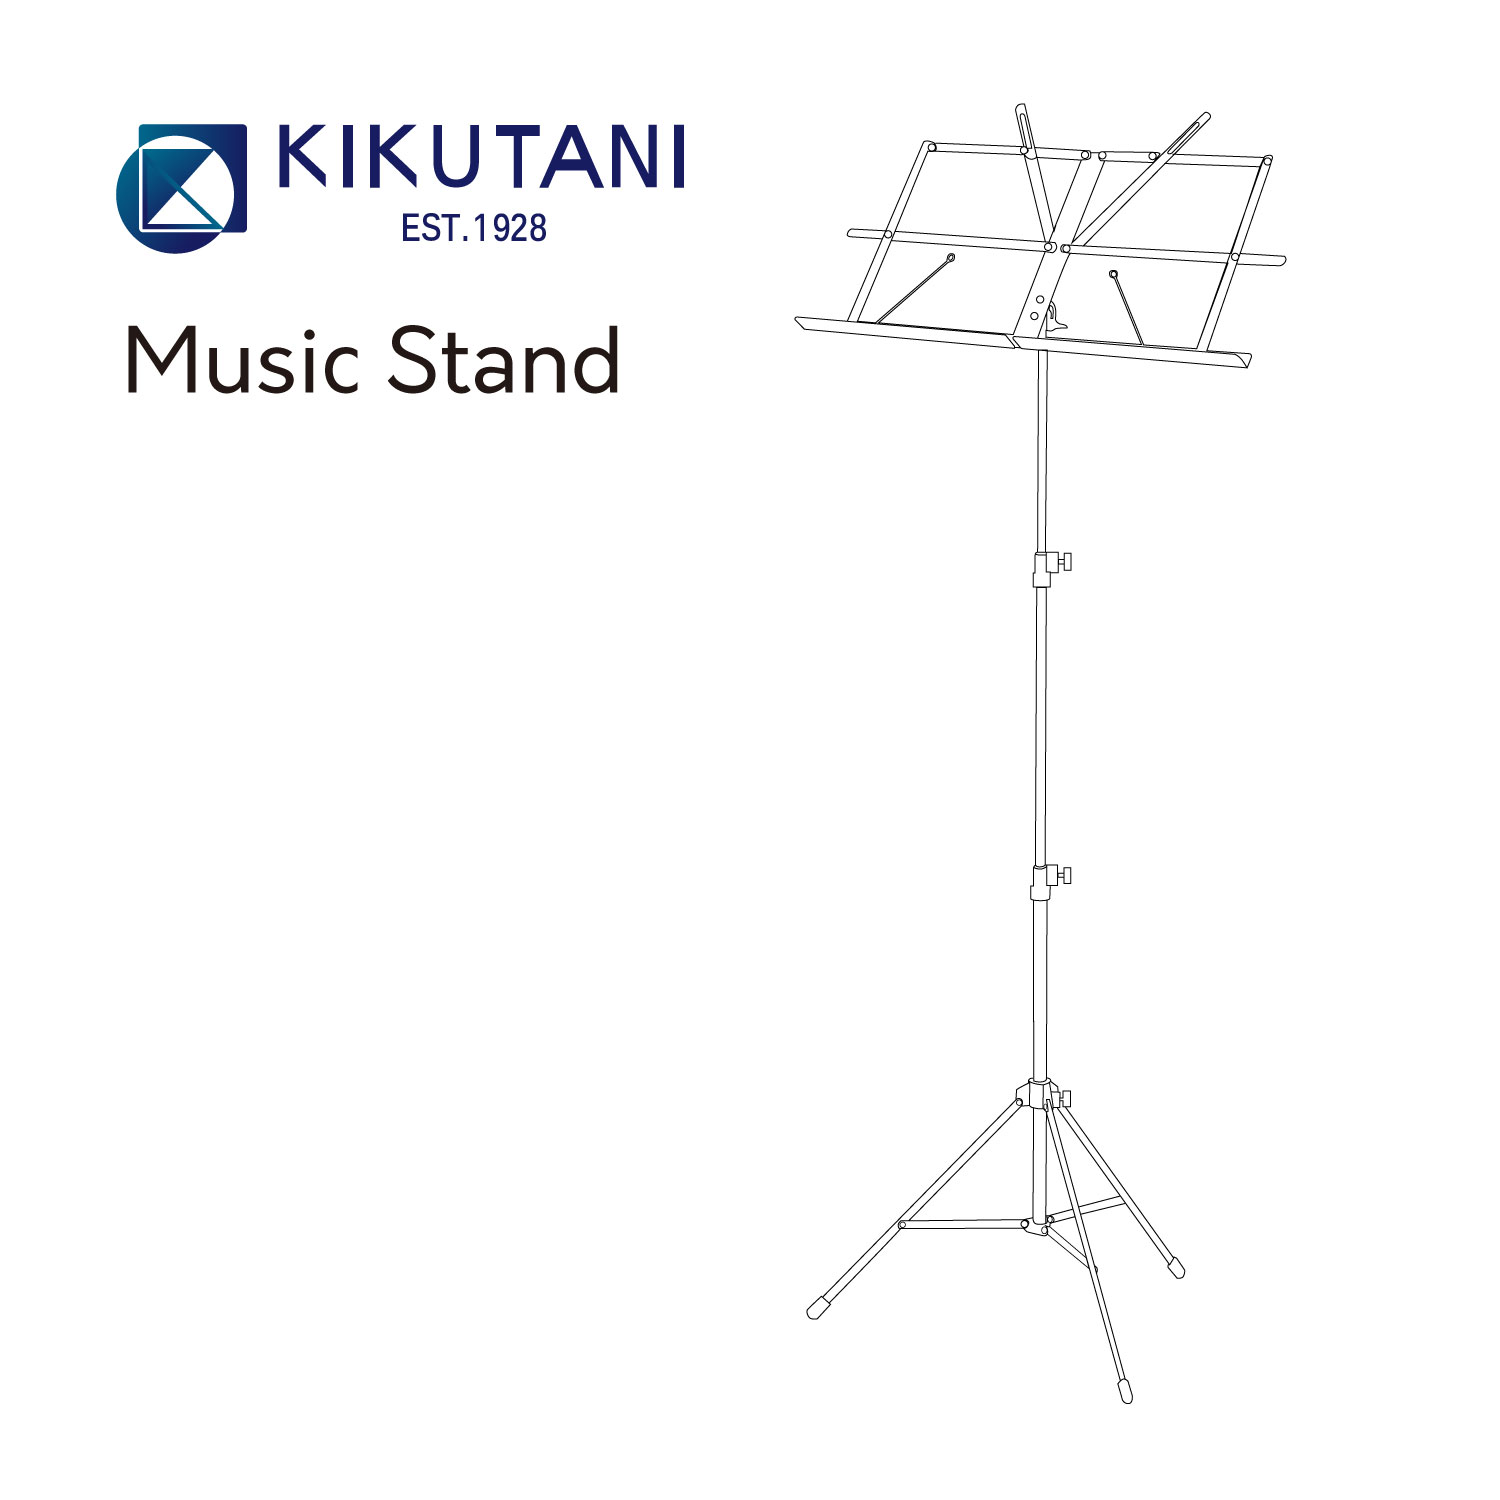 KIKUTANI 譜面台 | 商品カテゴリー | キクタニミュージック